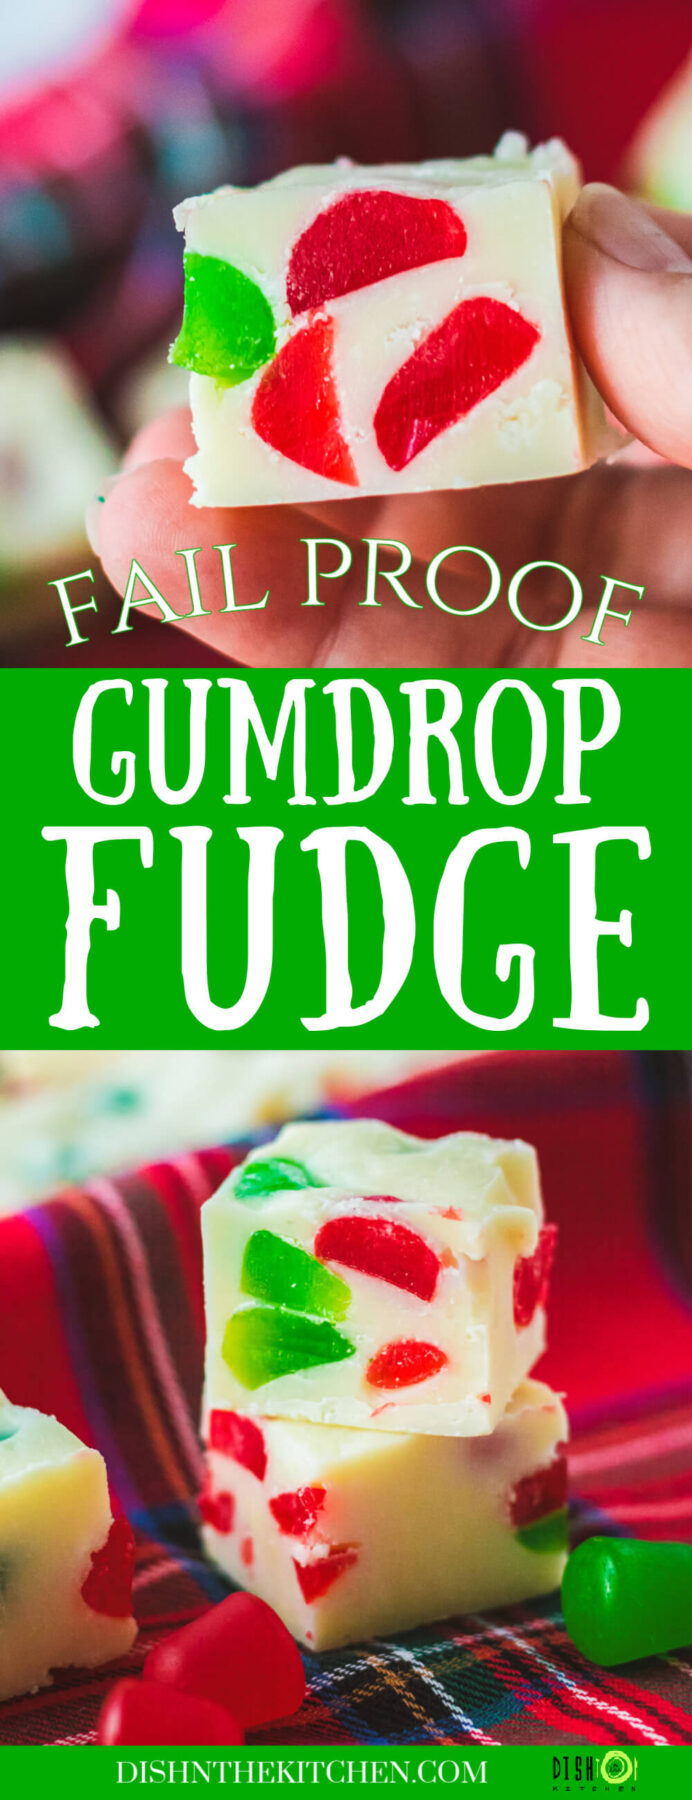 Pinterest image of a hand holding a piece of Gumdrop fudge.